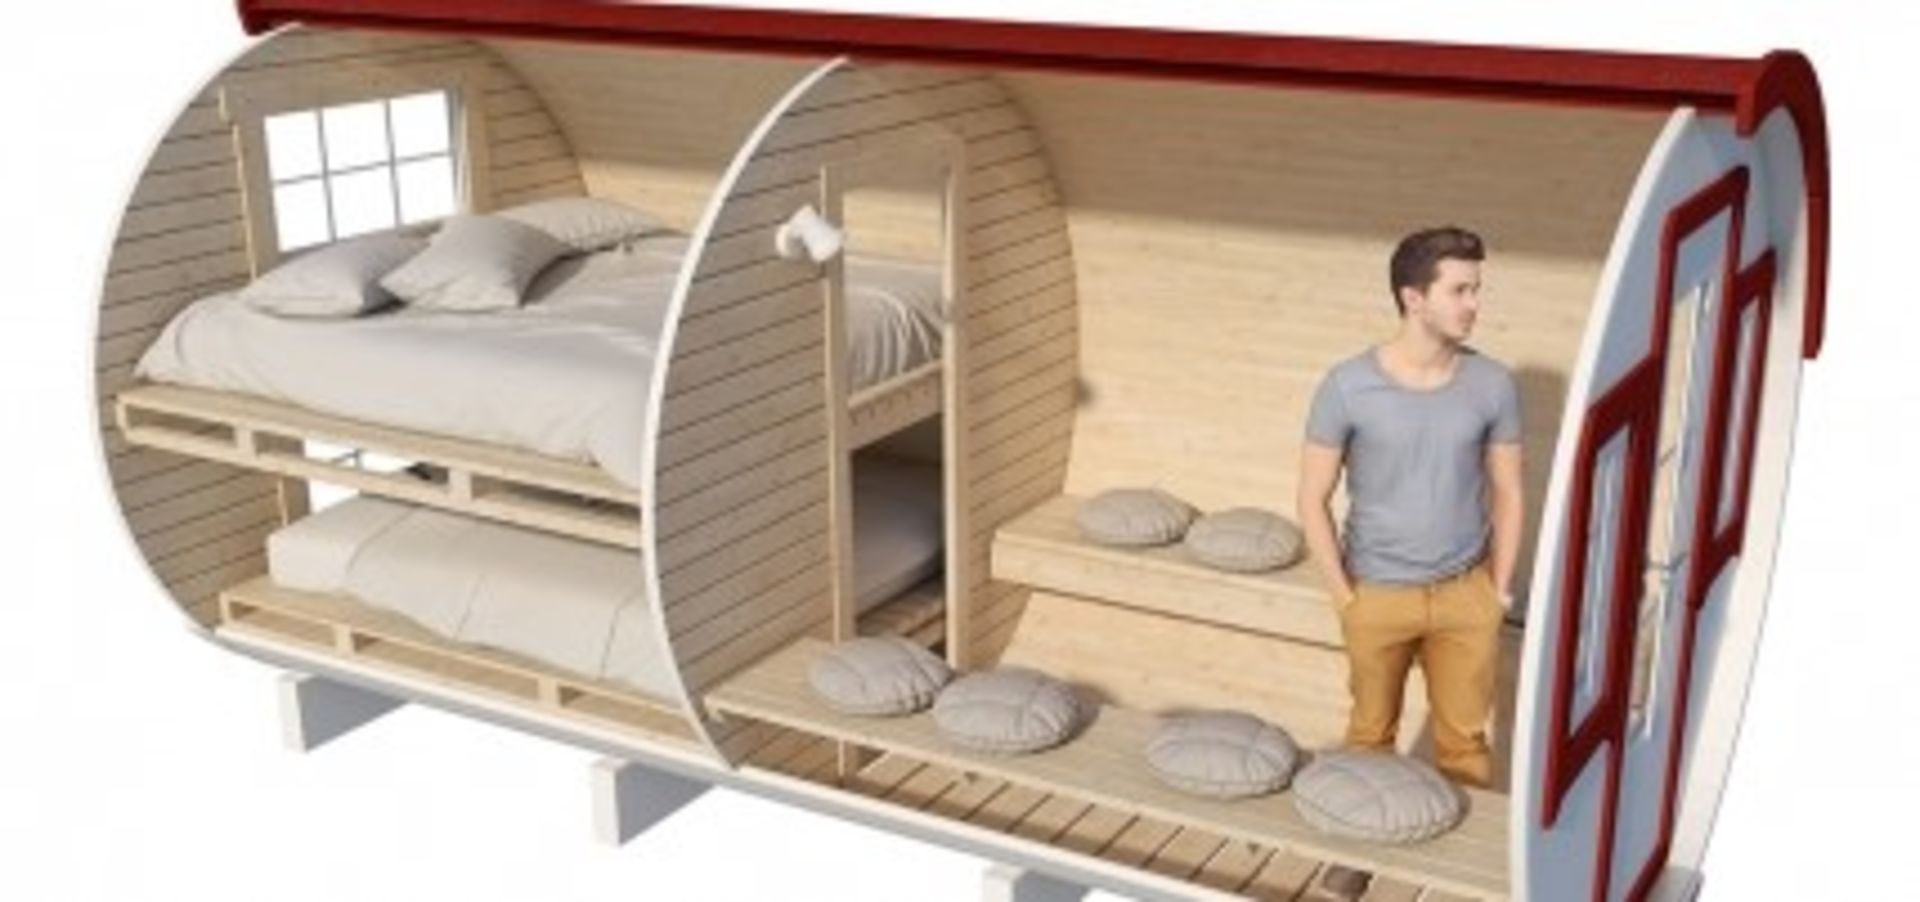 V Brand New 2.2 x 4.4m Barrel For Sleeping - Family Size - Sleeping & Sitting Rooms Inside - - Bild 3 aus 3